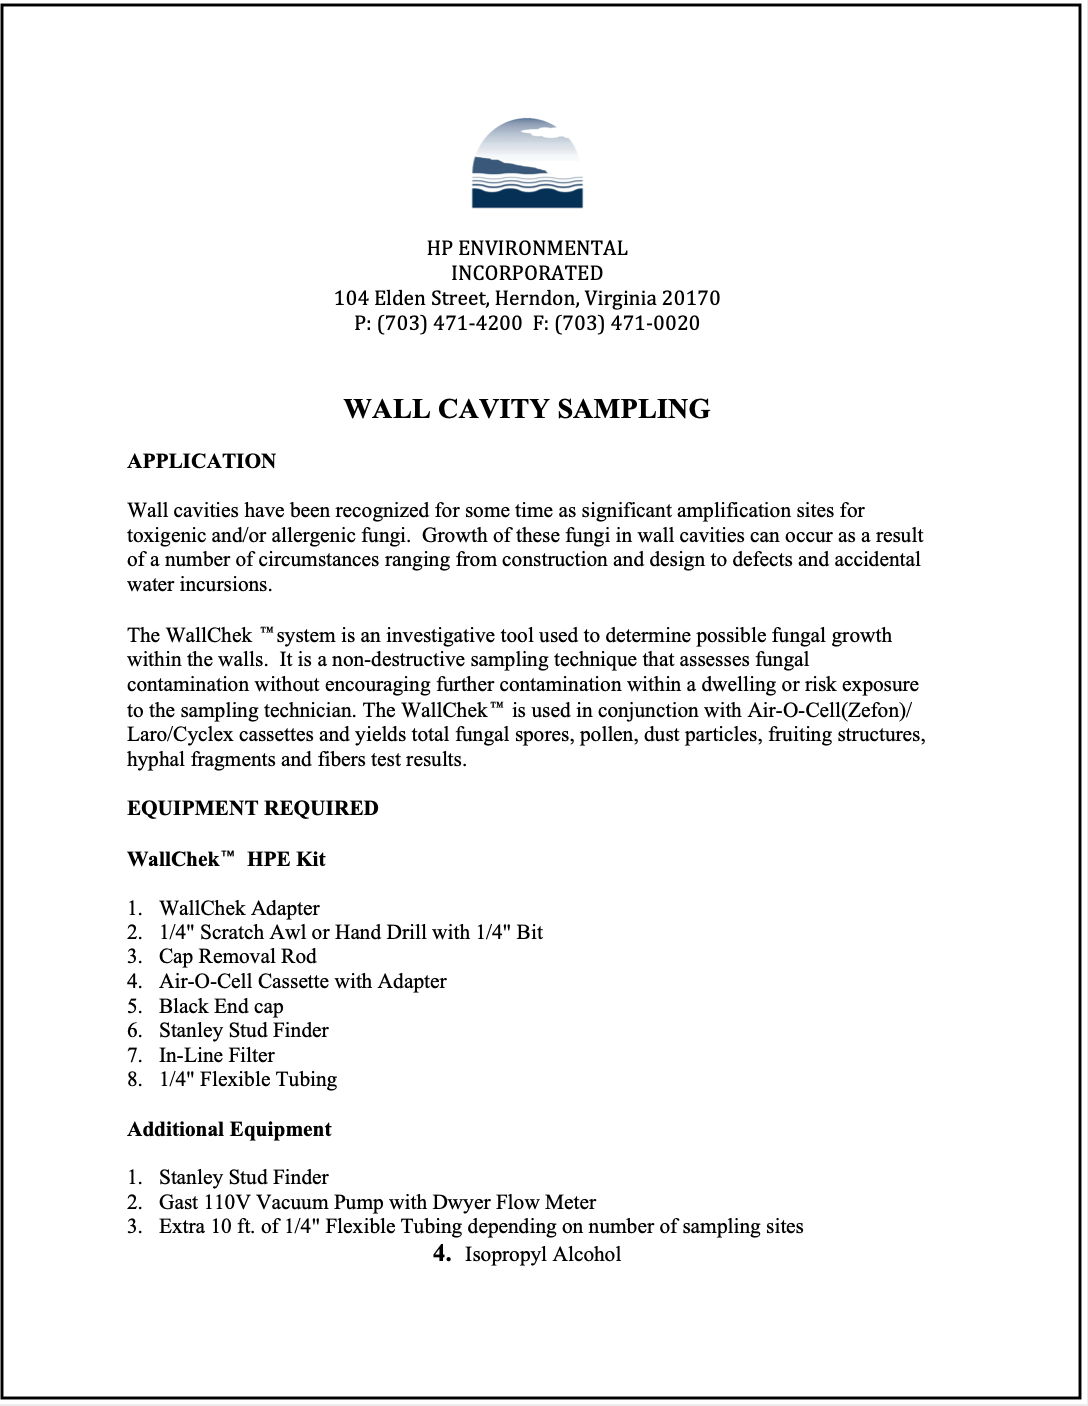 Wall Cavity Sampling_image